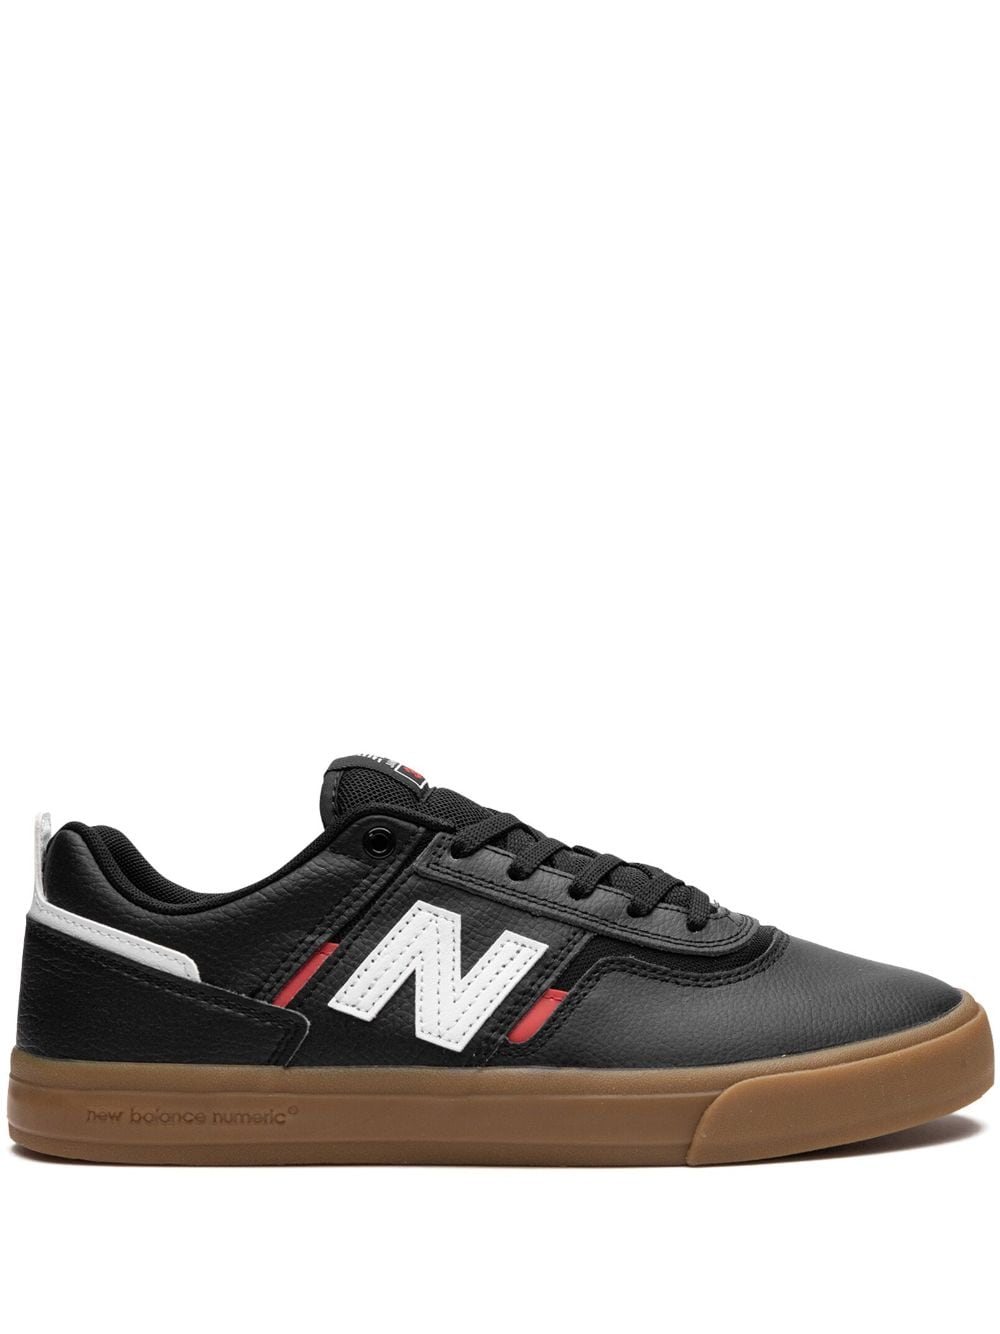 New Balance Numeric 306 "Black/Gum" sneakers von New Balance